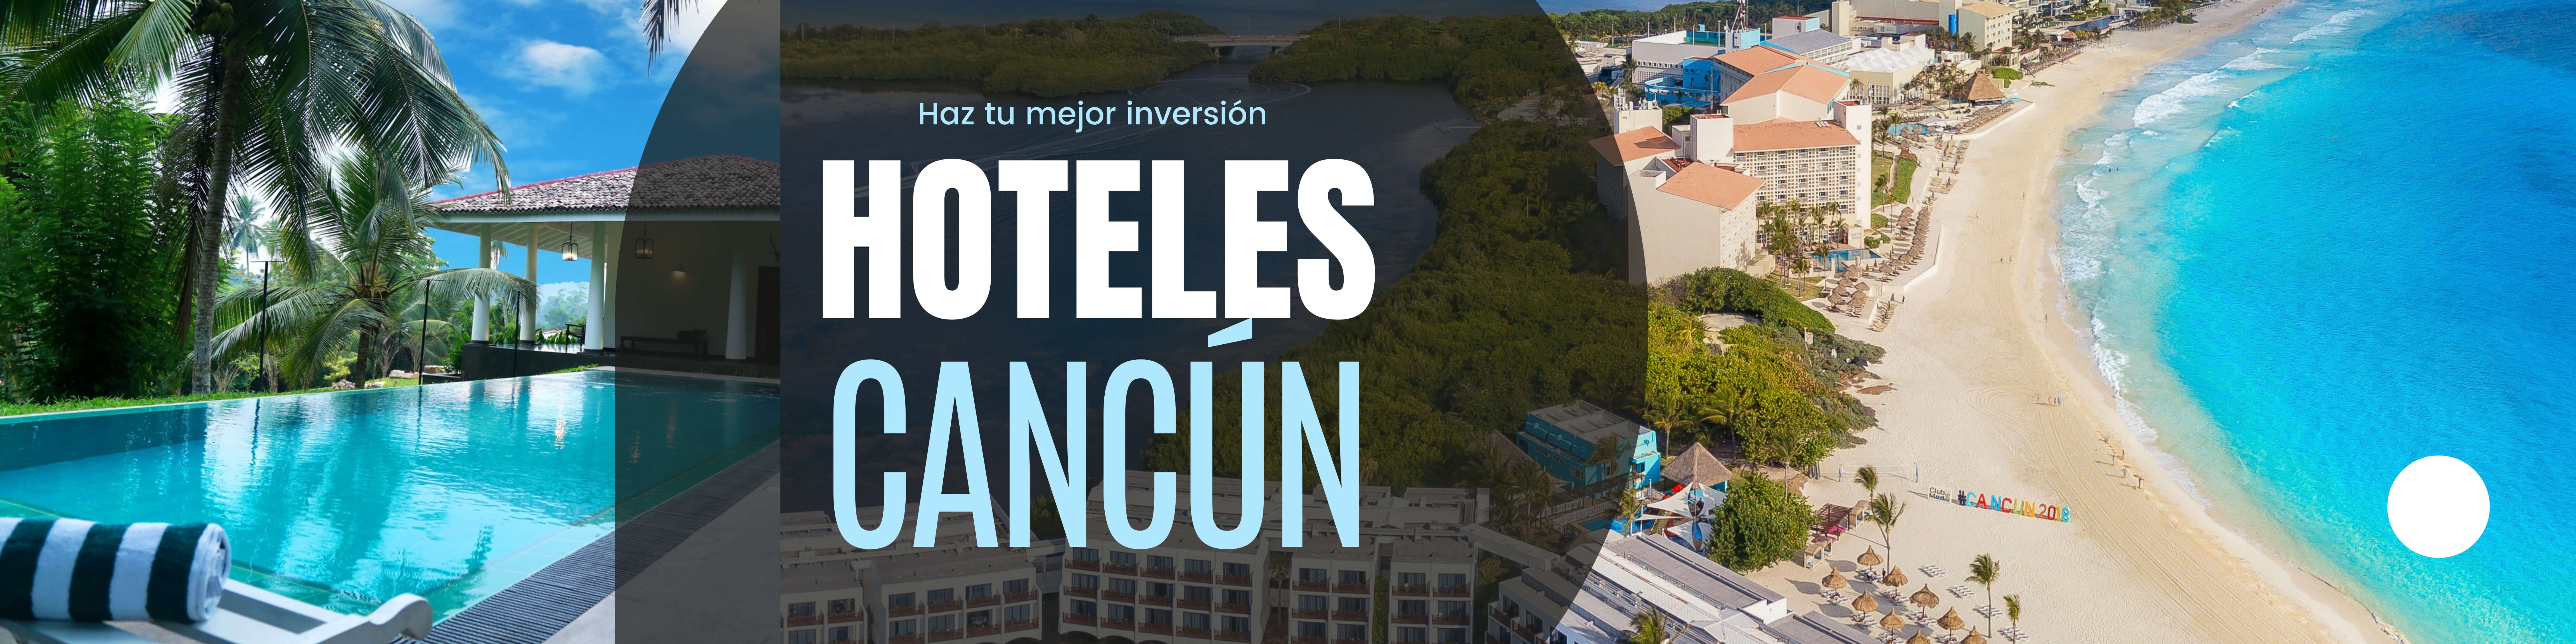 Hoteles en venta Cancun